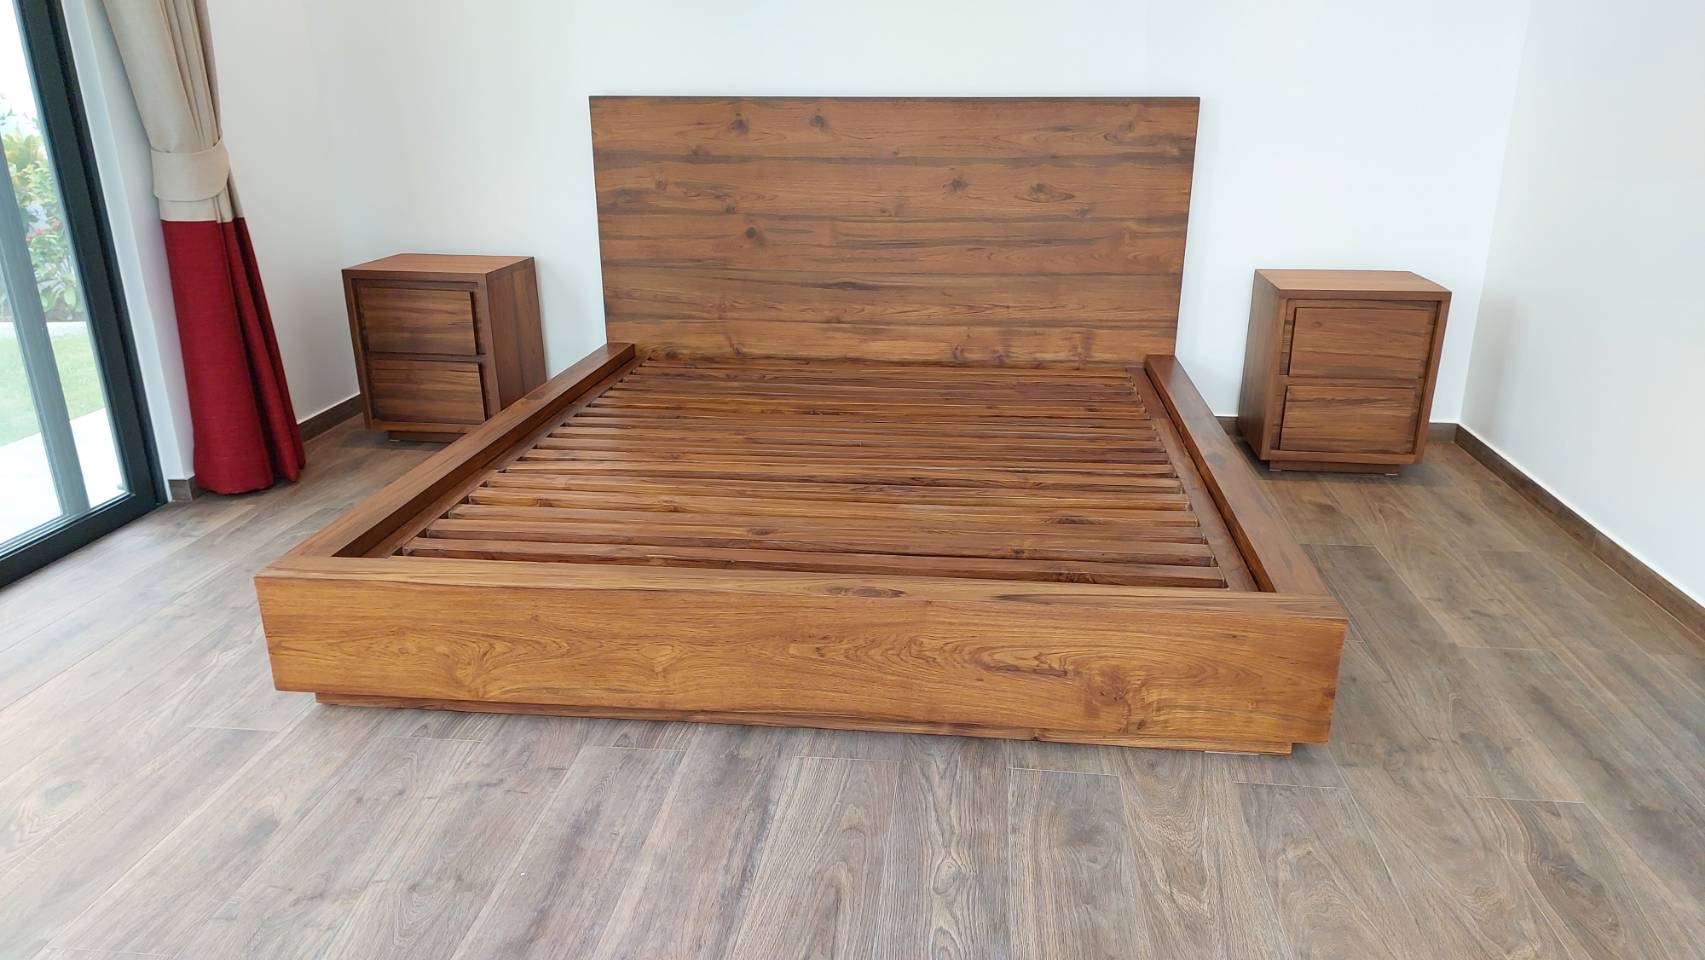 Made to Order Bedroom Furniture. - Beds 126